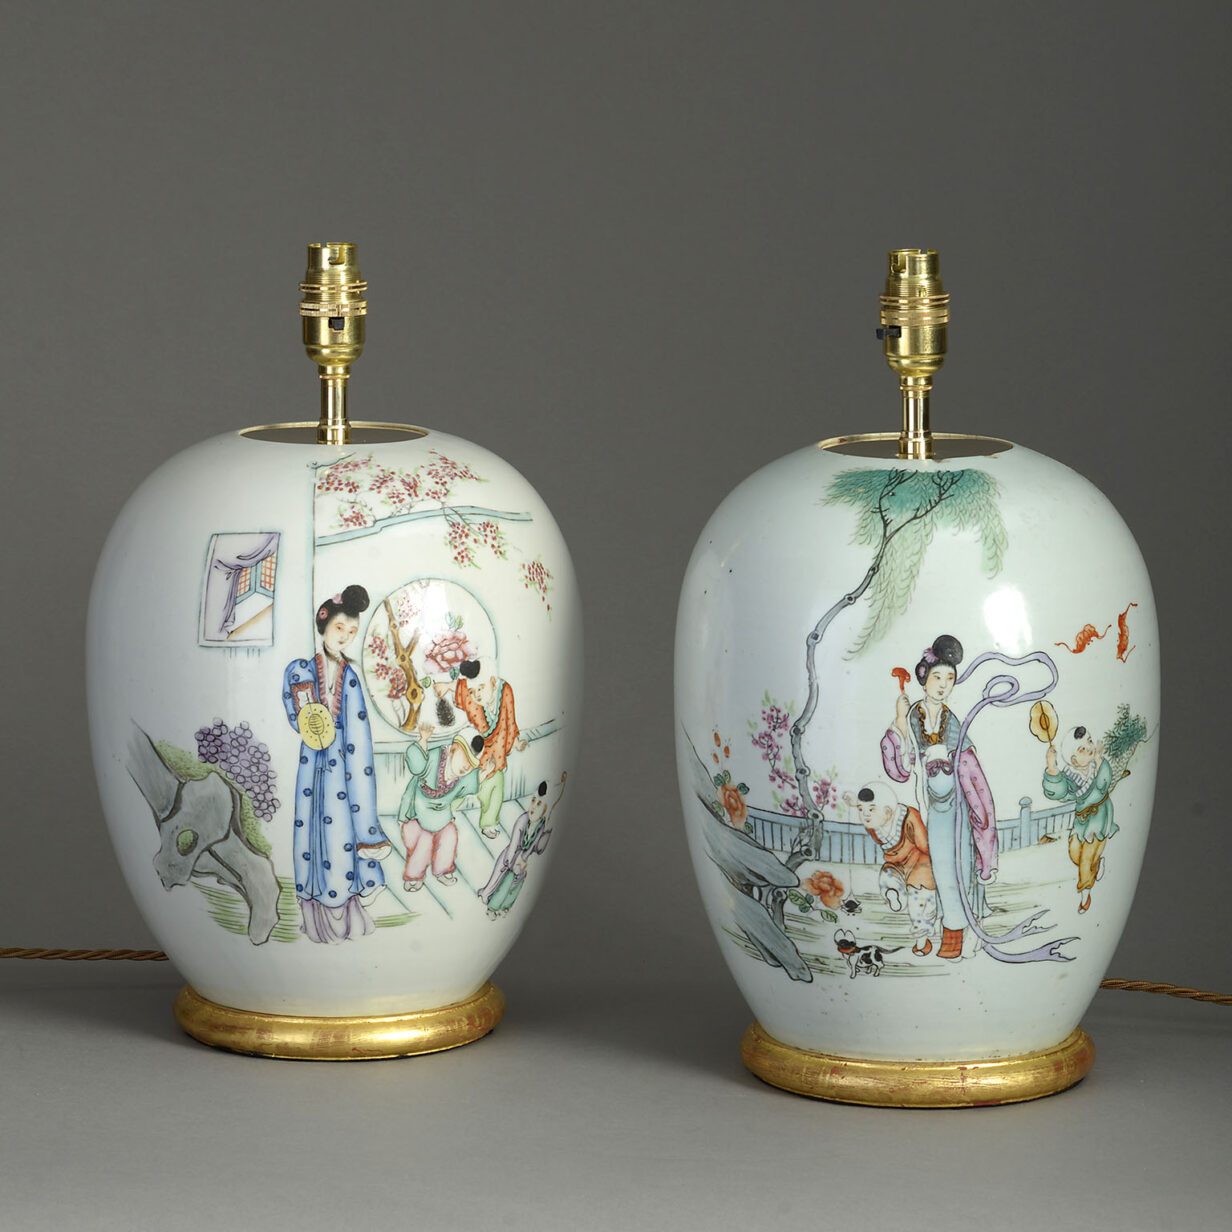 Pair of republic period figurative porcelain jar lamps